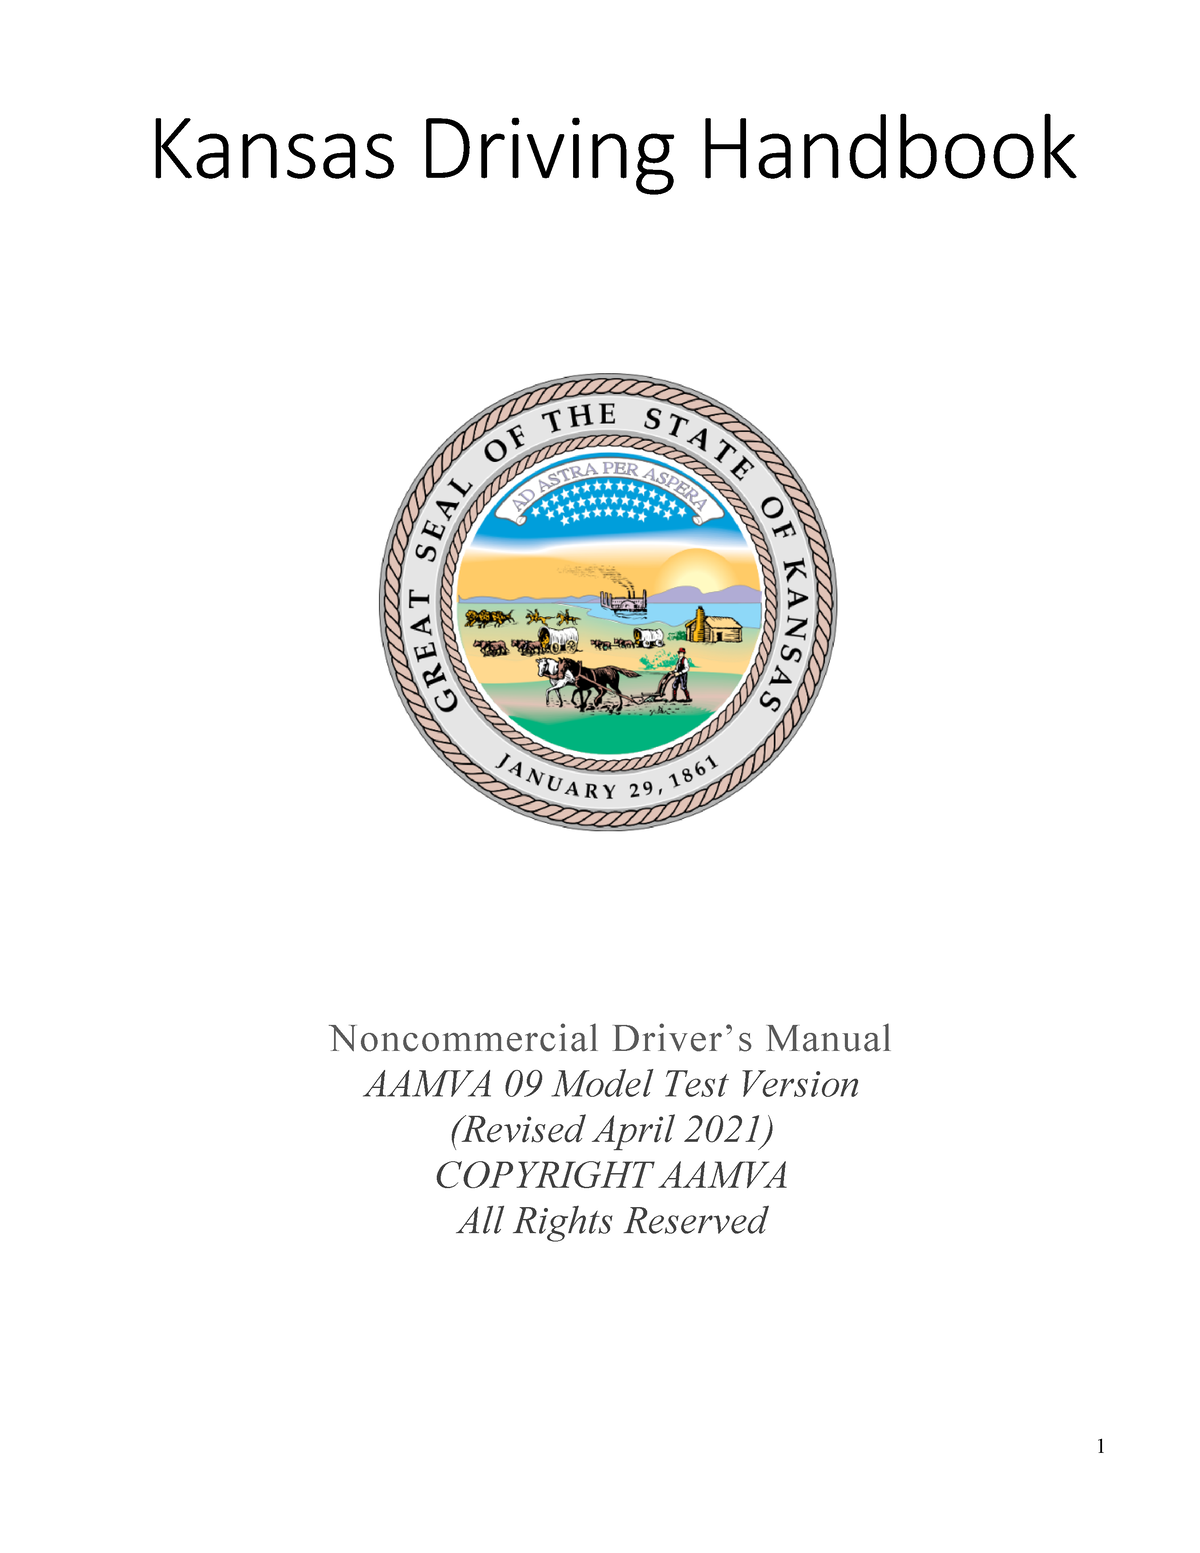 Dlhb good Kansas Driving Handbook Driver’s Manual